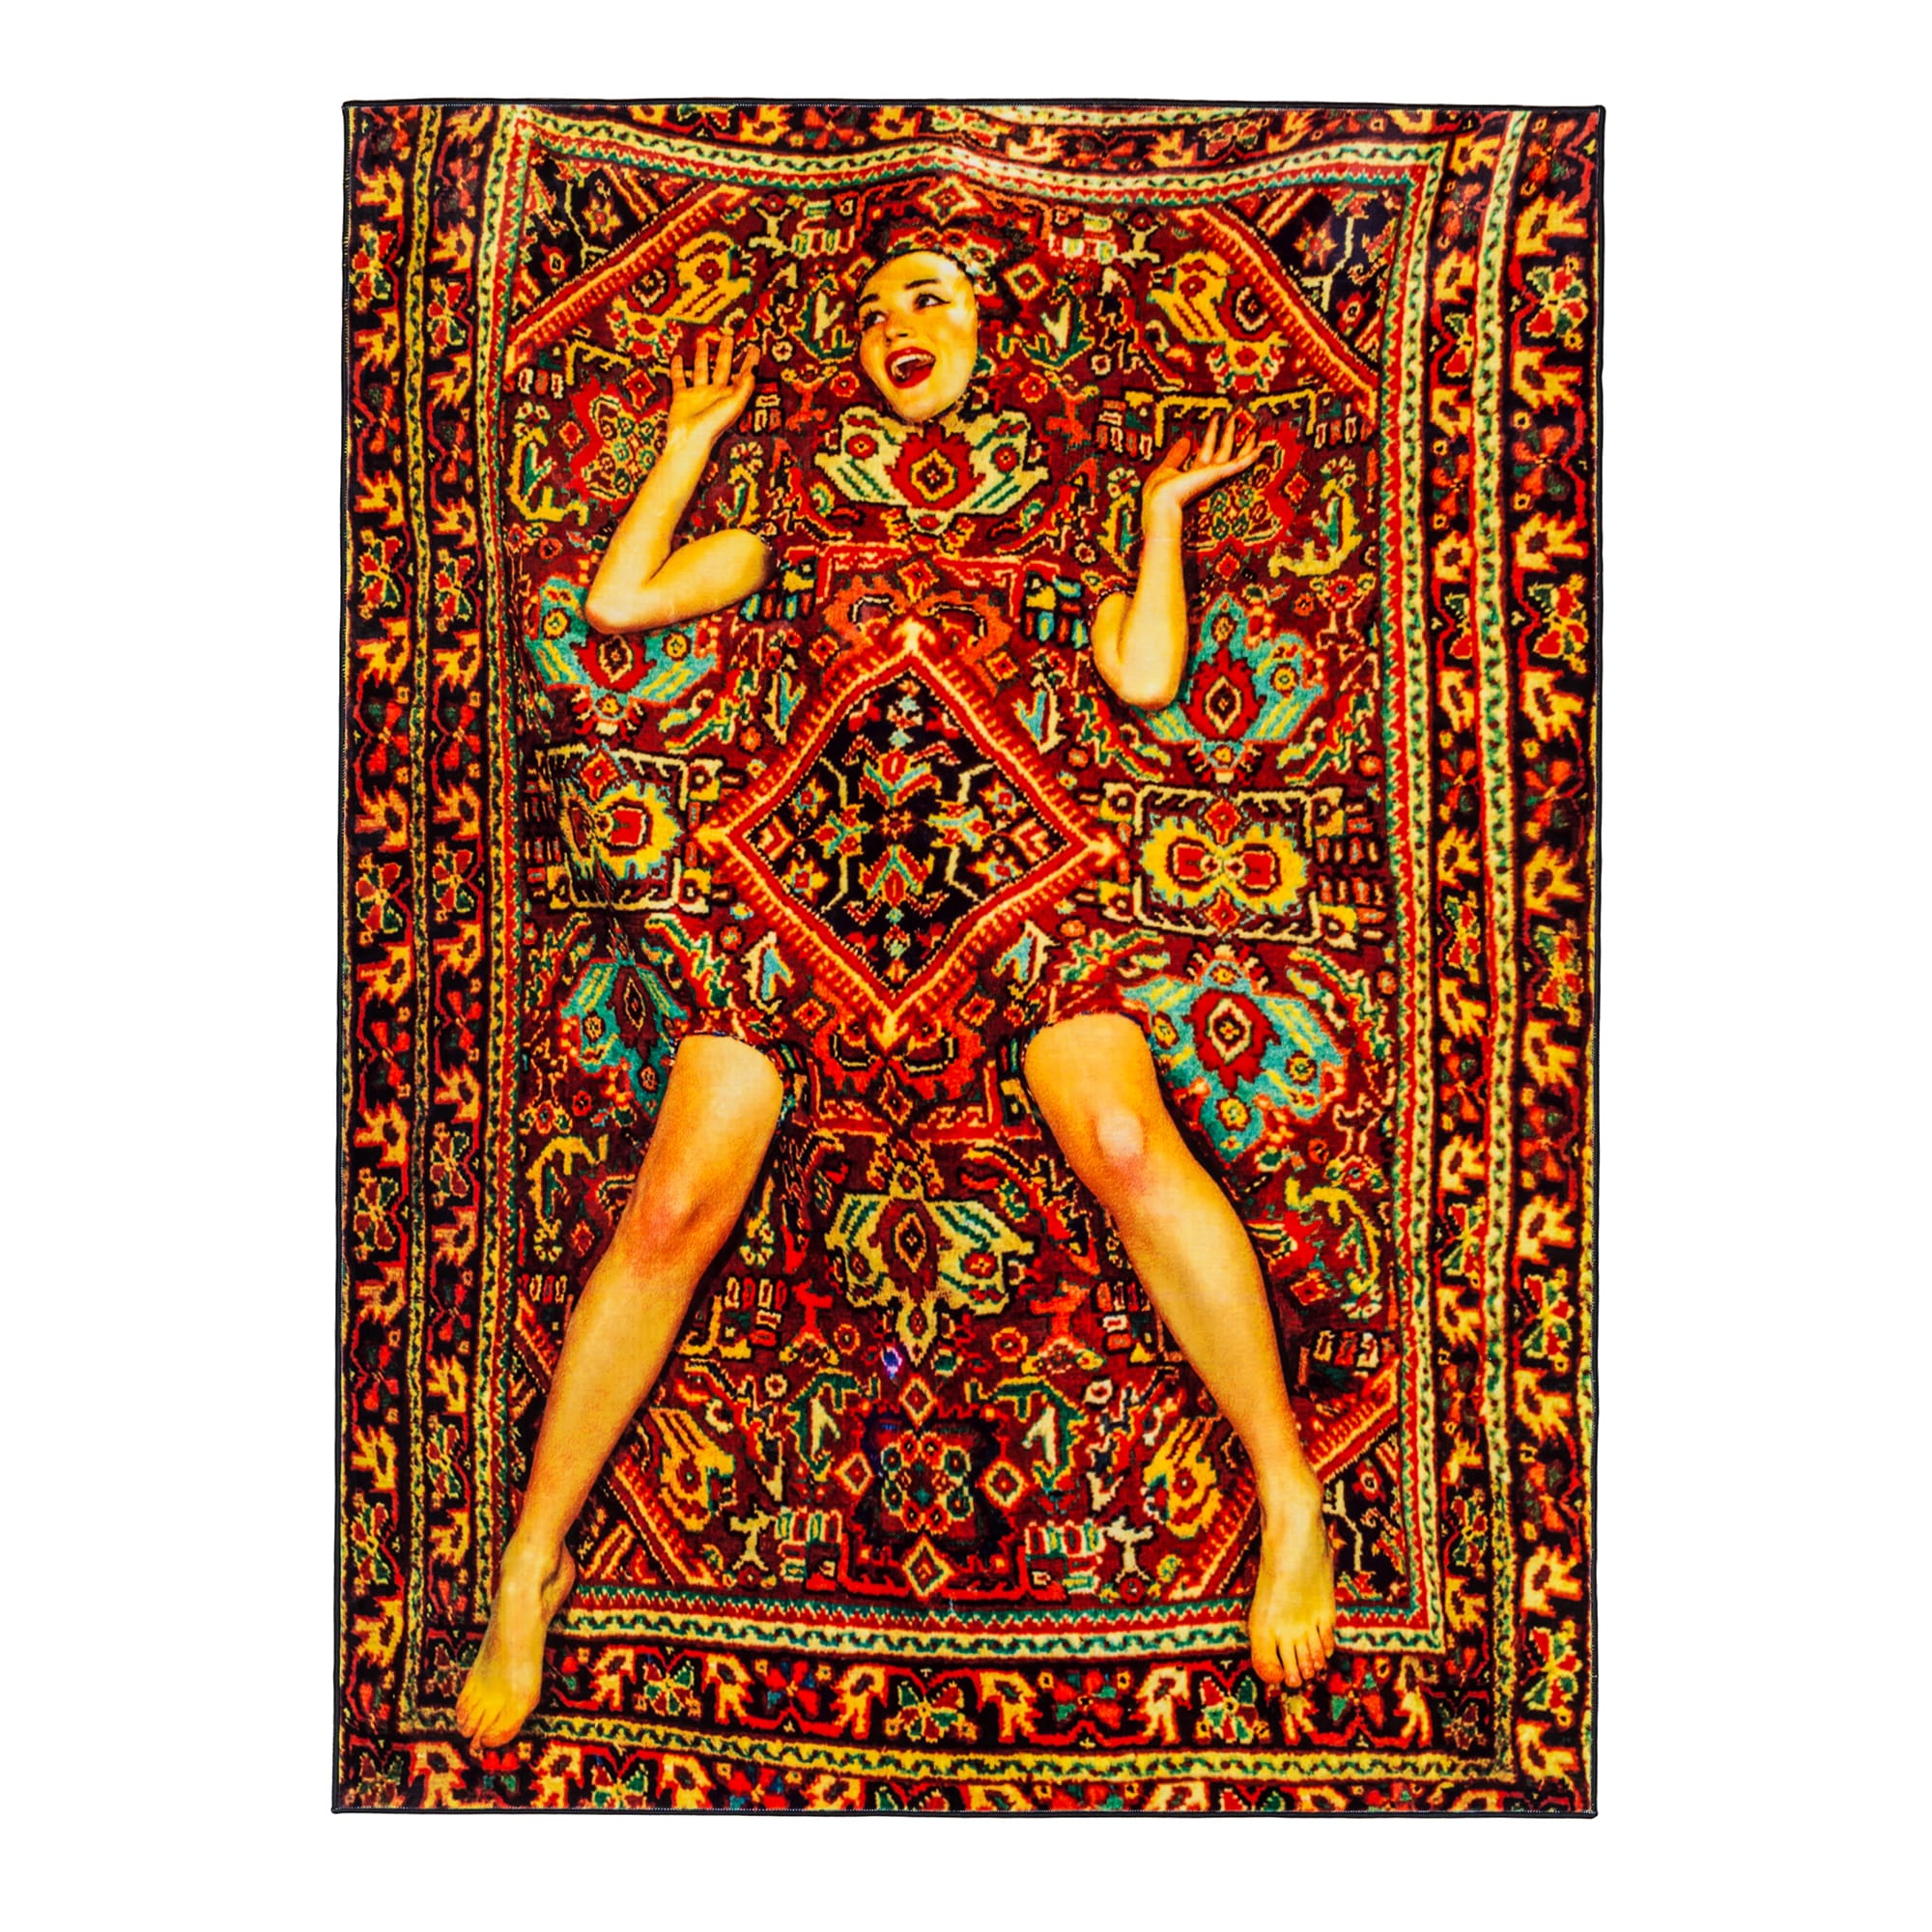 Seletti wears Toiletpaper Rectangular Rug Lady on Carpet